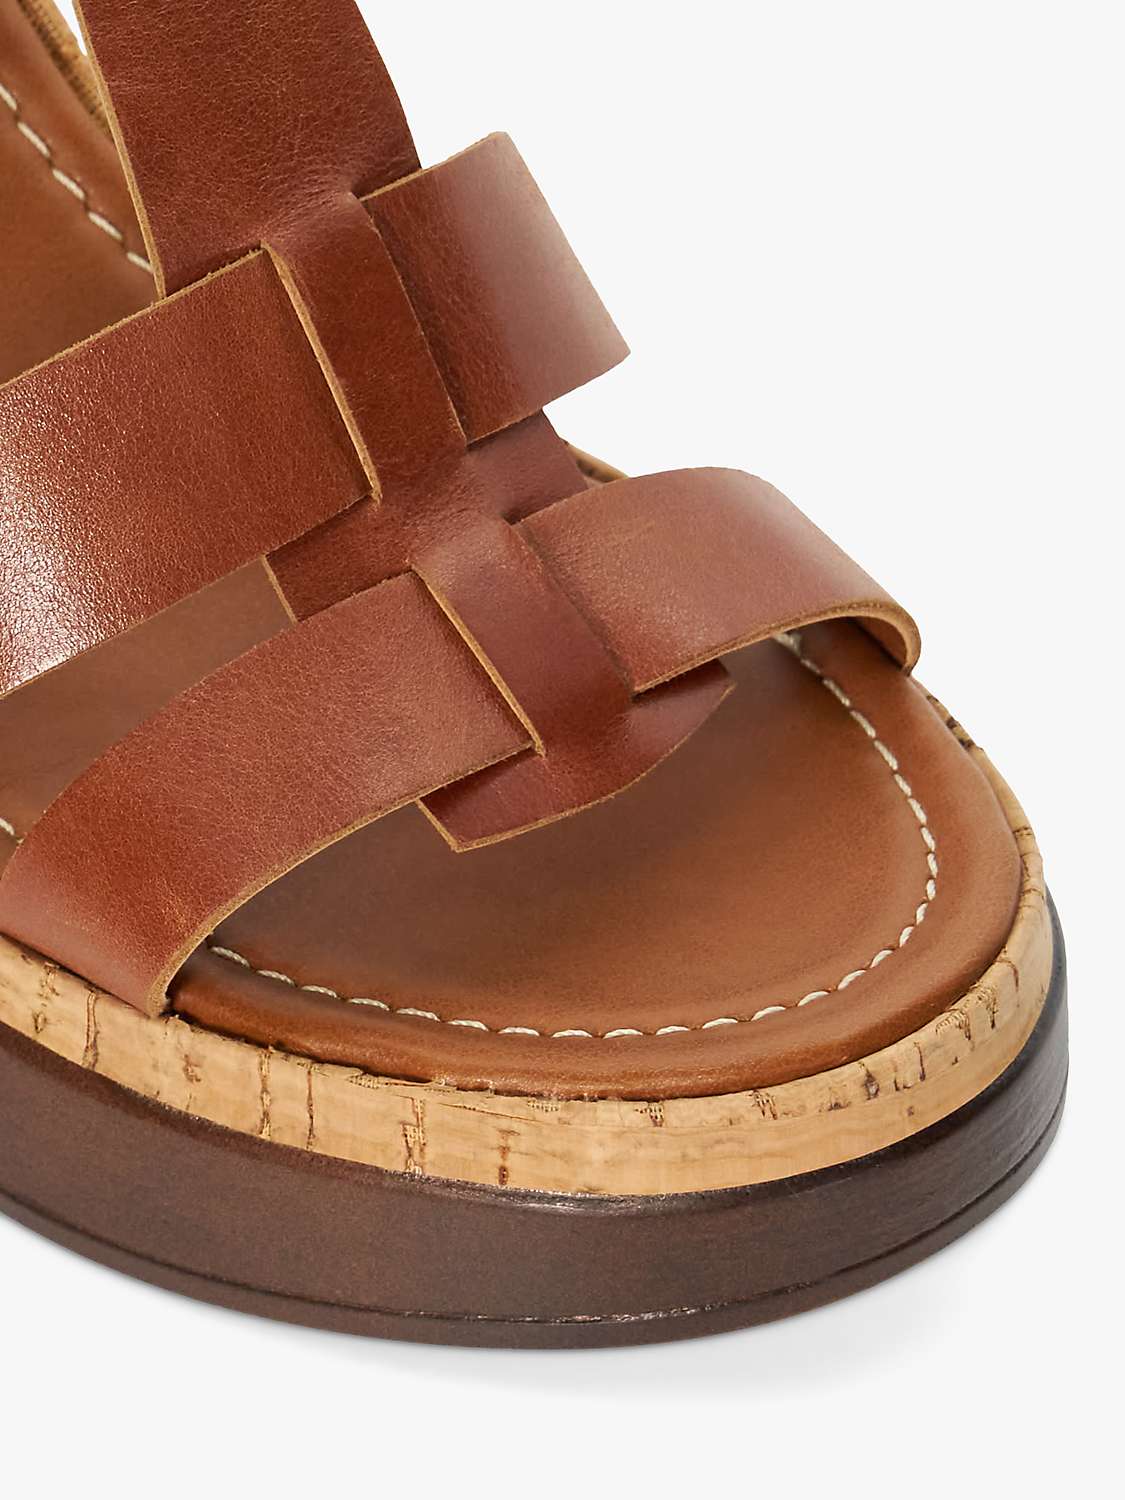 Buy Dune Jungle Leather Block Heel Sandals Online at johnlewis.com